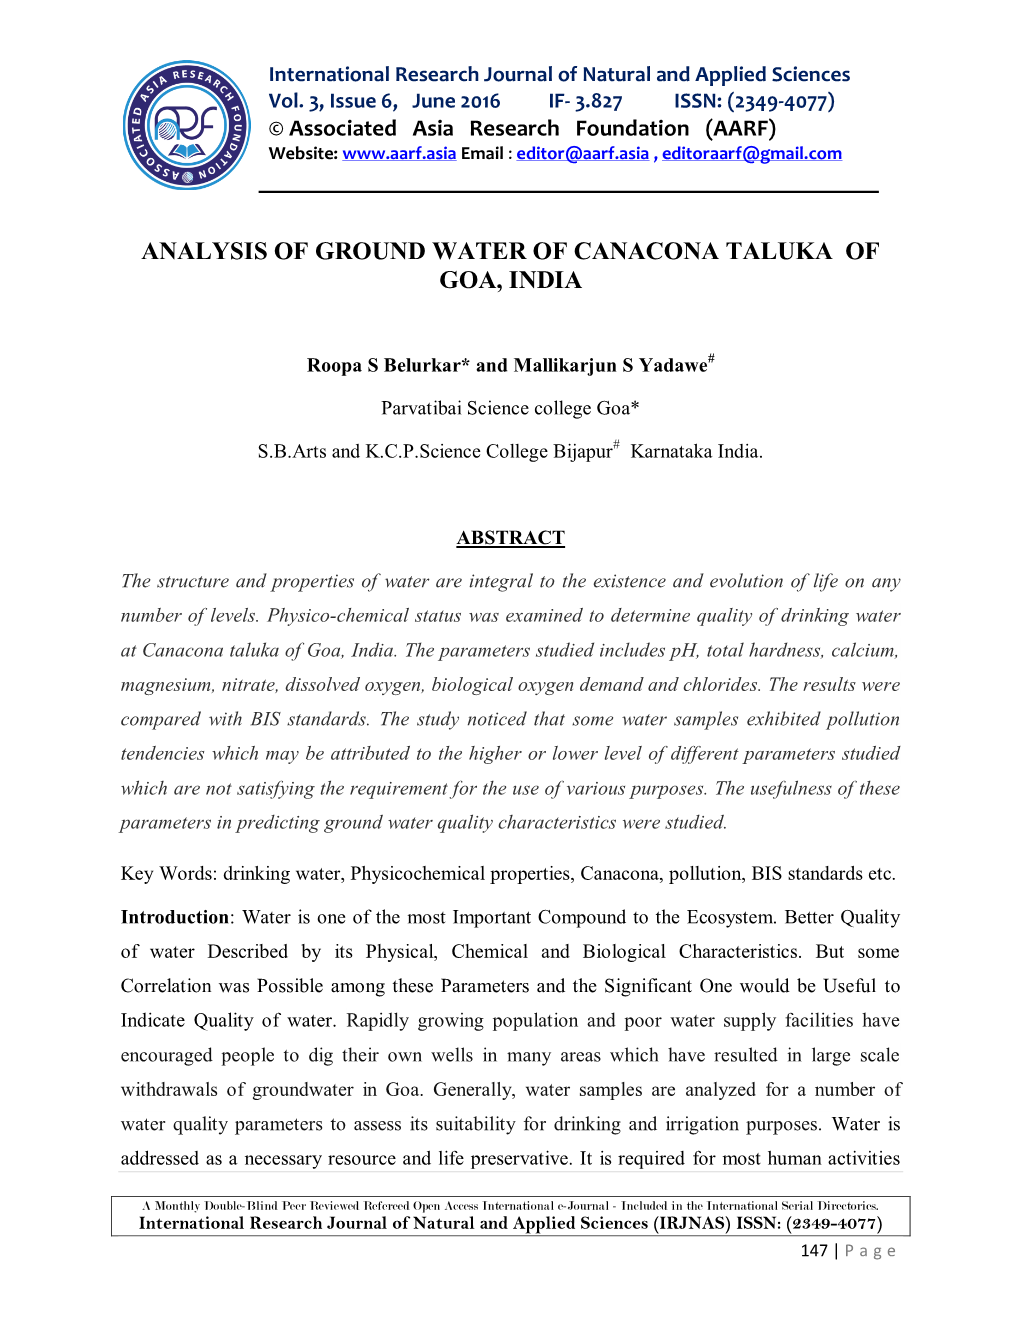 Analysis of Ground Water of Canacona Taluka of Goa, India